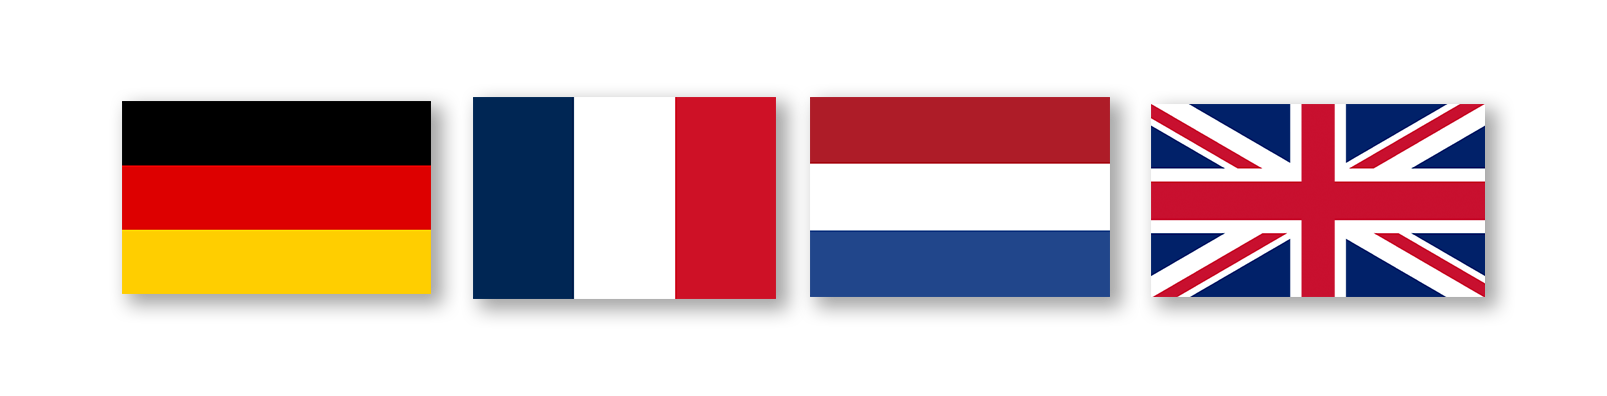 Flags UK Germany Netherlands France